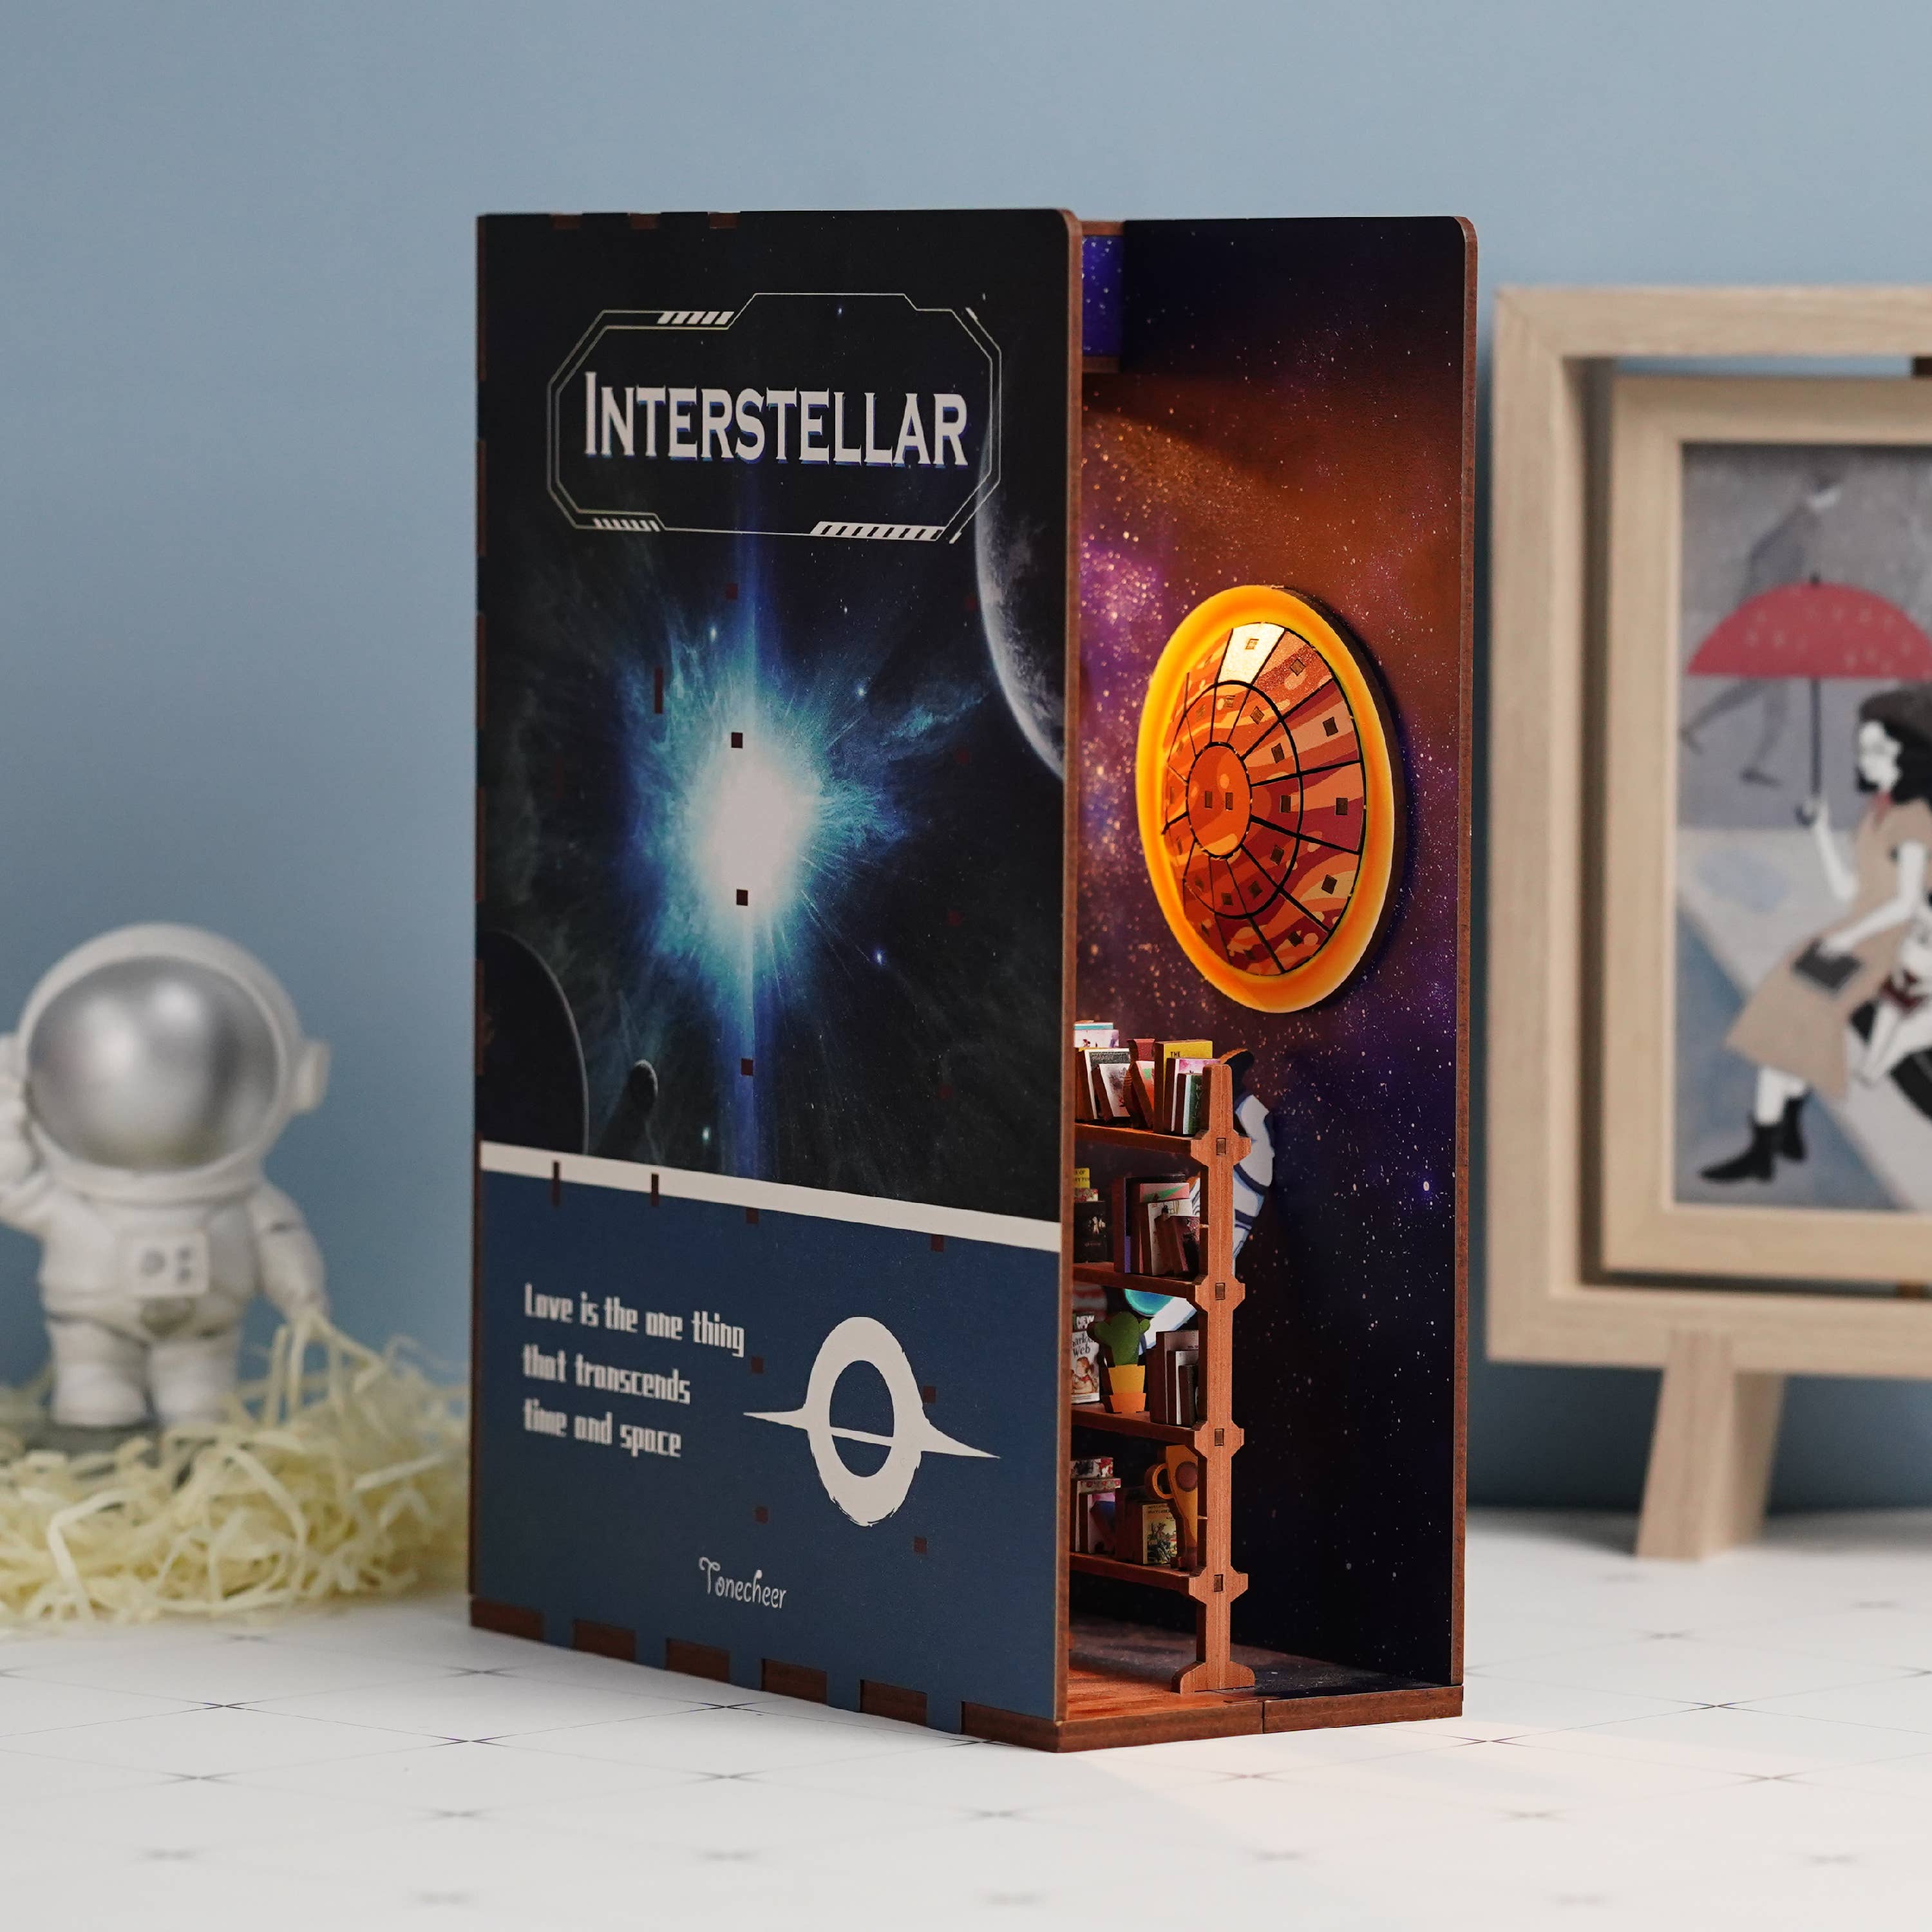 Hands Craft DIY Miniature House Book Nook Kit: Interstellar Kawaii Gifts